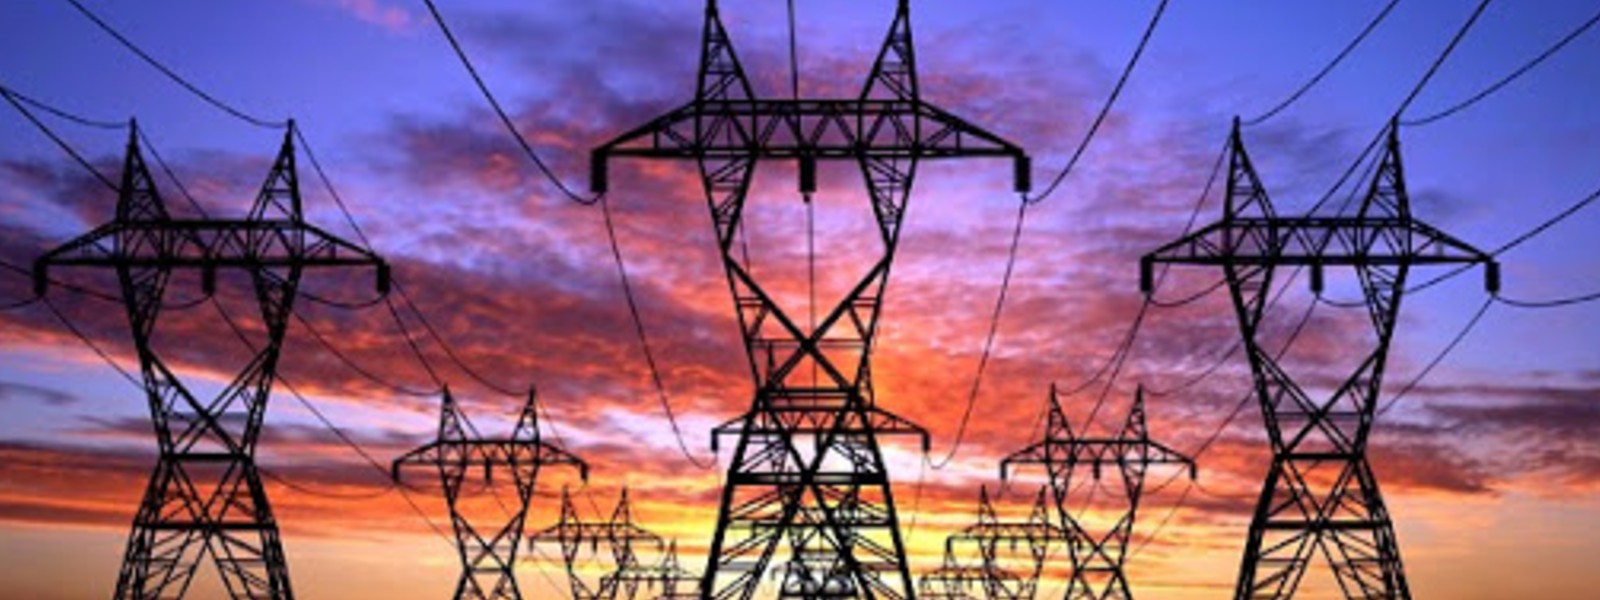 NO power cuts until April 2022 – Minister Lokuge